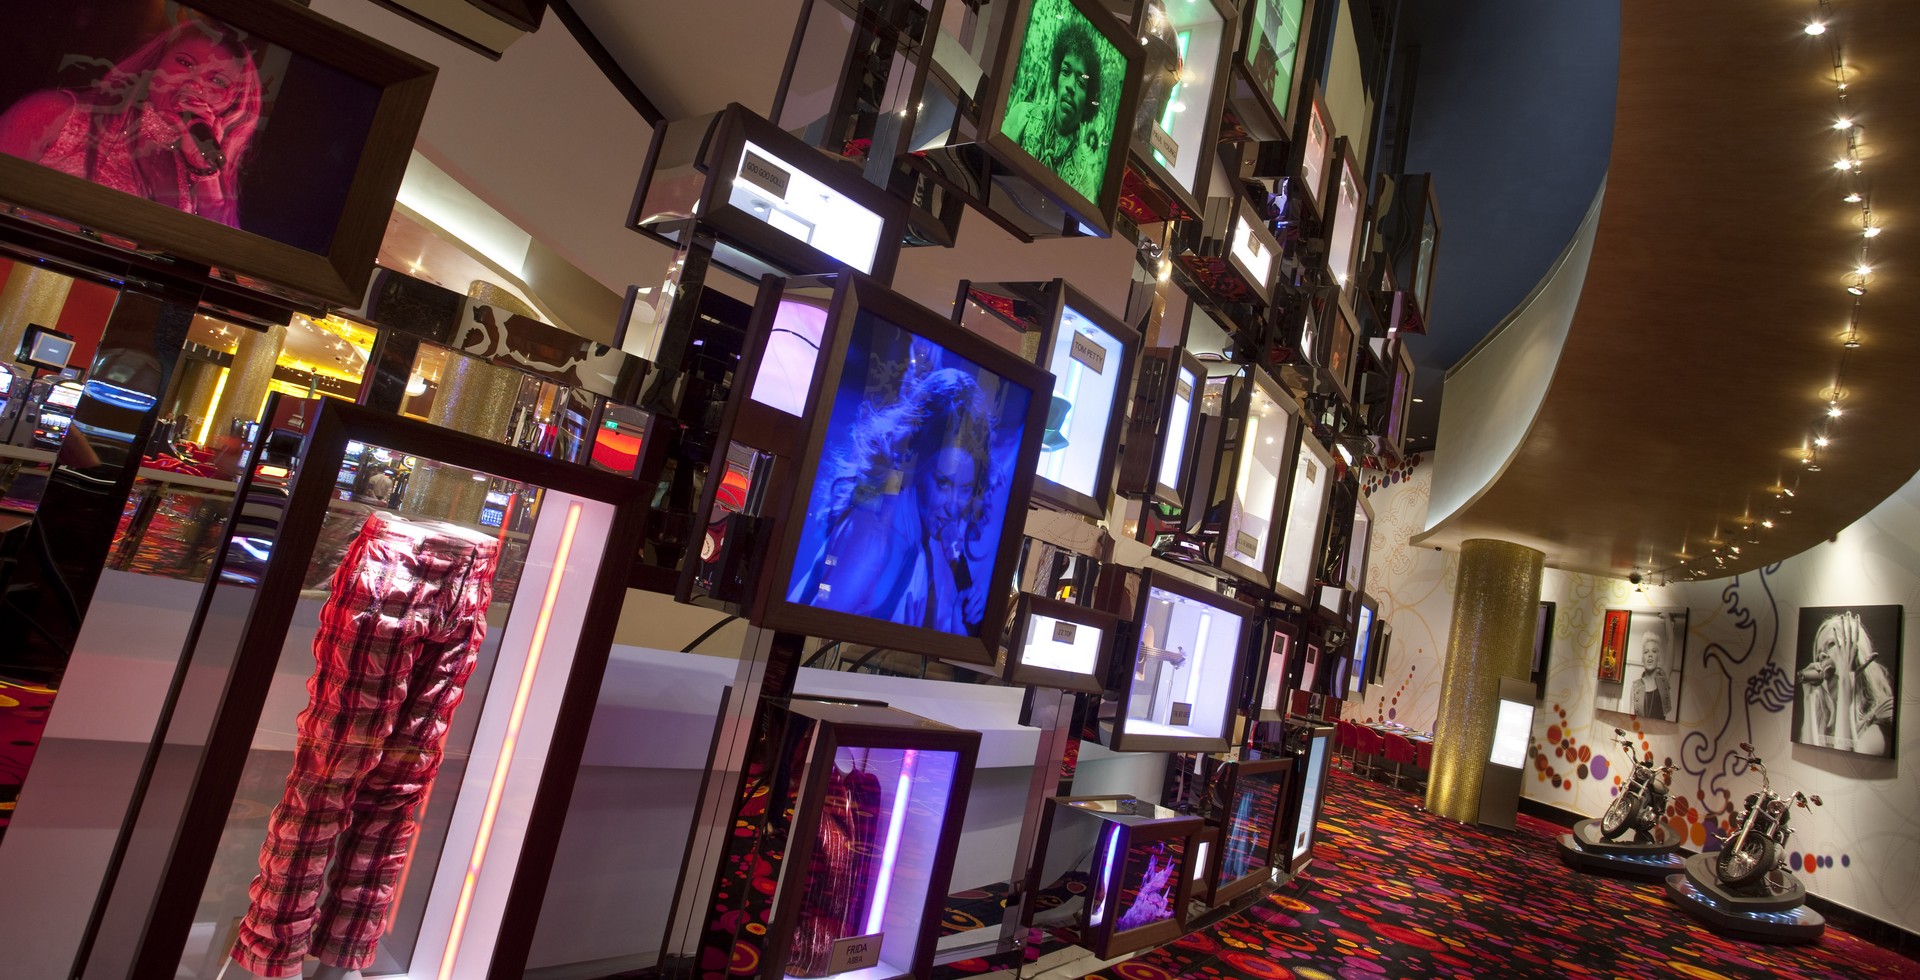 Hard Rock Hotel Gaming Area: Interior